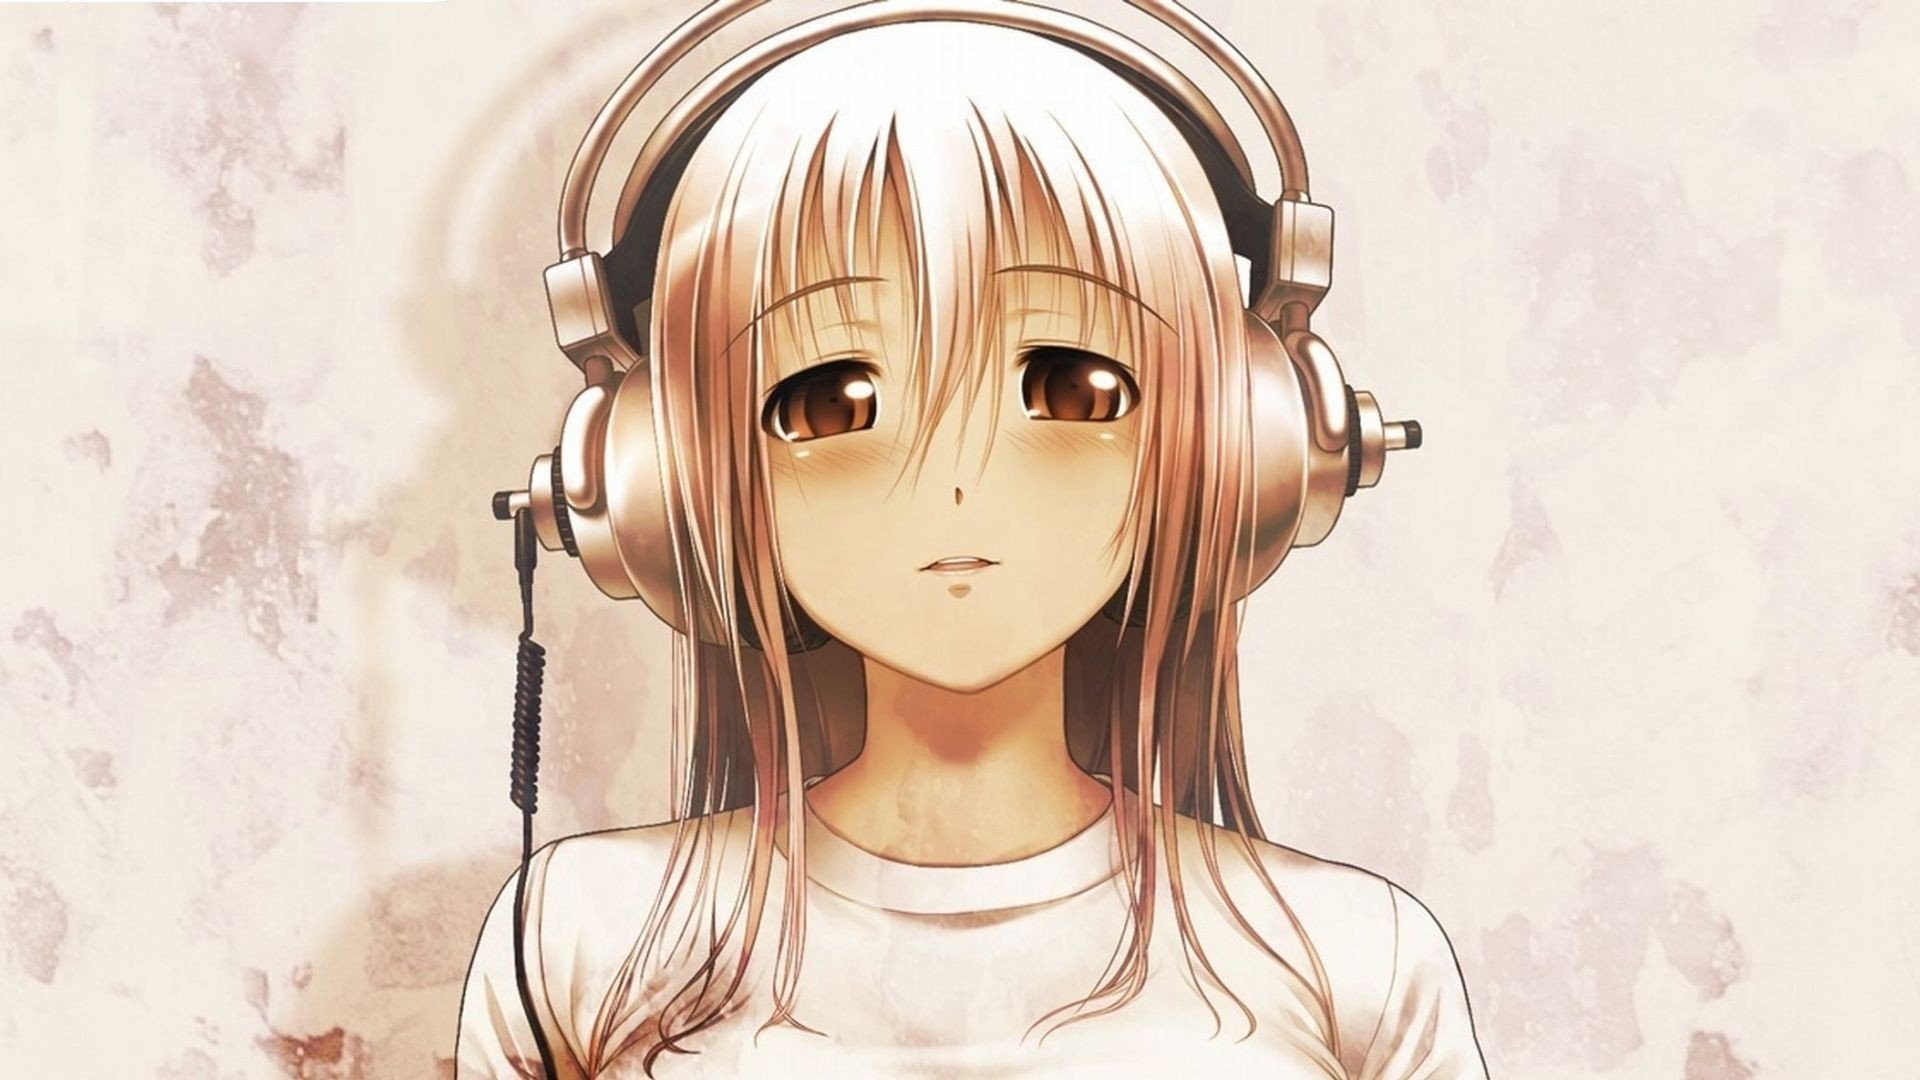 Anime Music Wallpapers 4K Resolution | Anime Music Wallpaper… | Flickr-demhanvico.com.vn